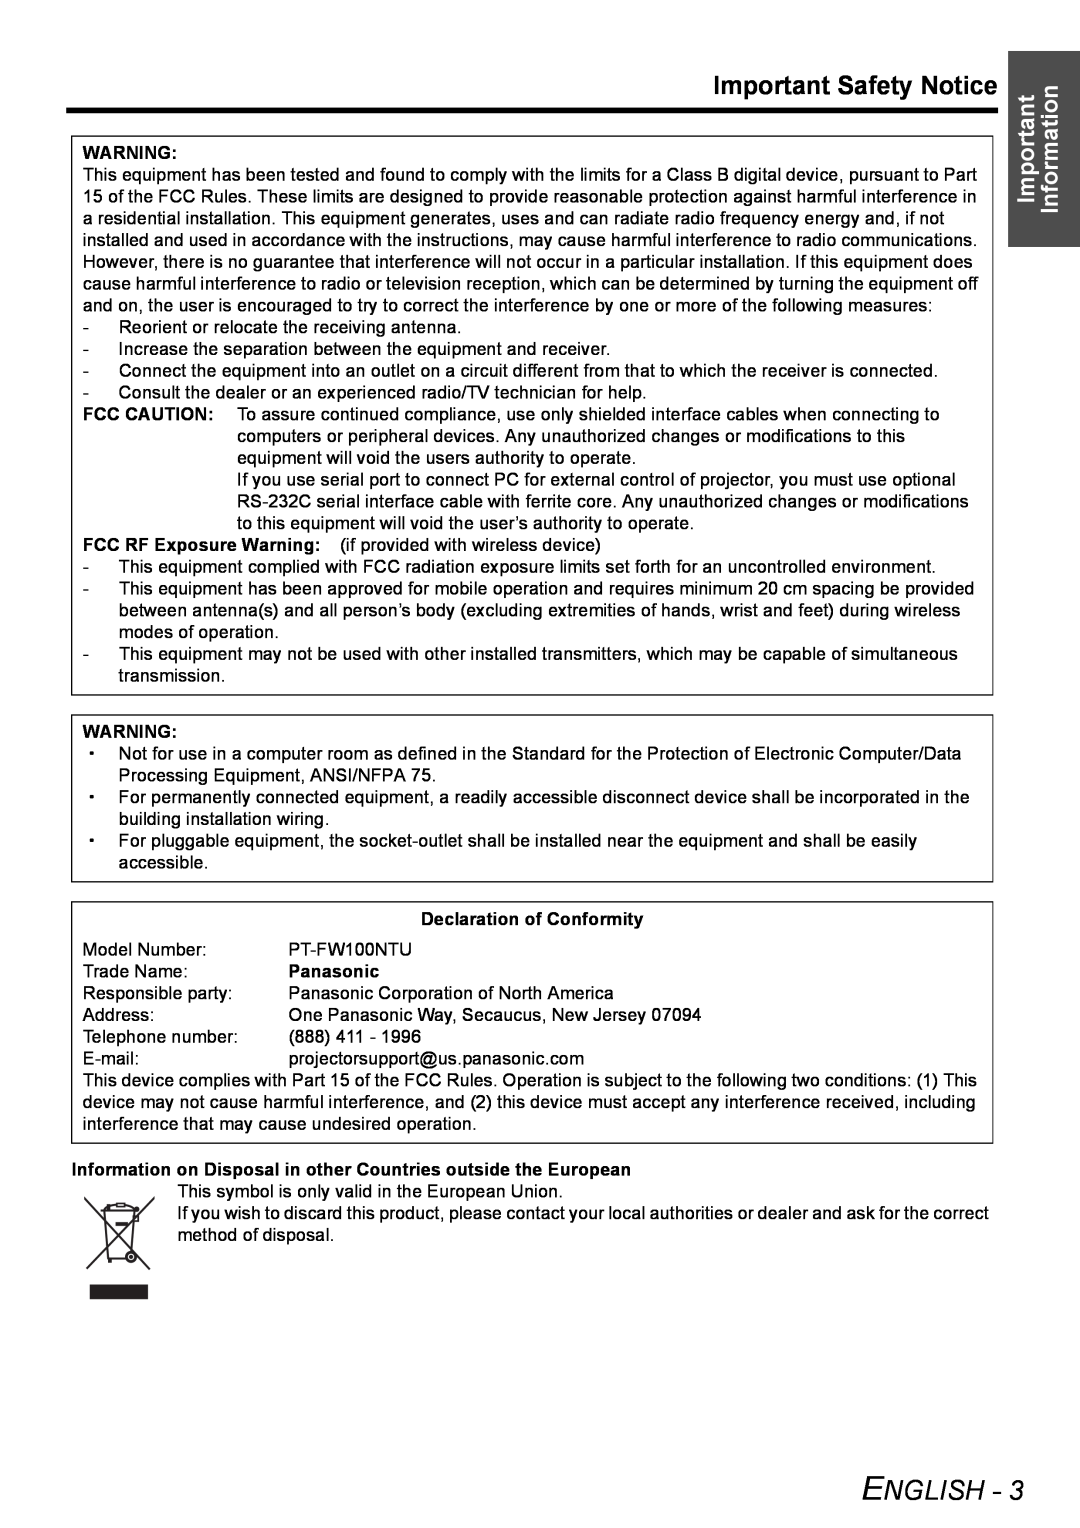 Panasonic PT-FW100NTU manual Important Safety Notice, English, Important Information, Declaration of Conformity, Panasonic 